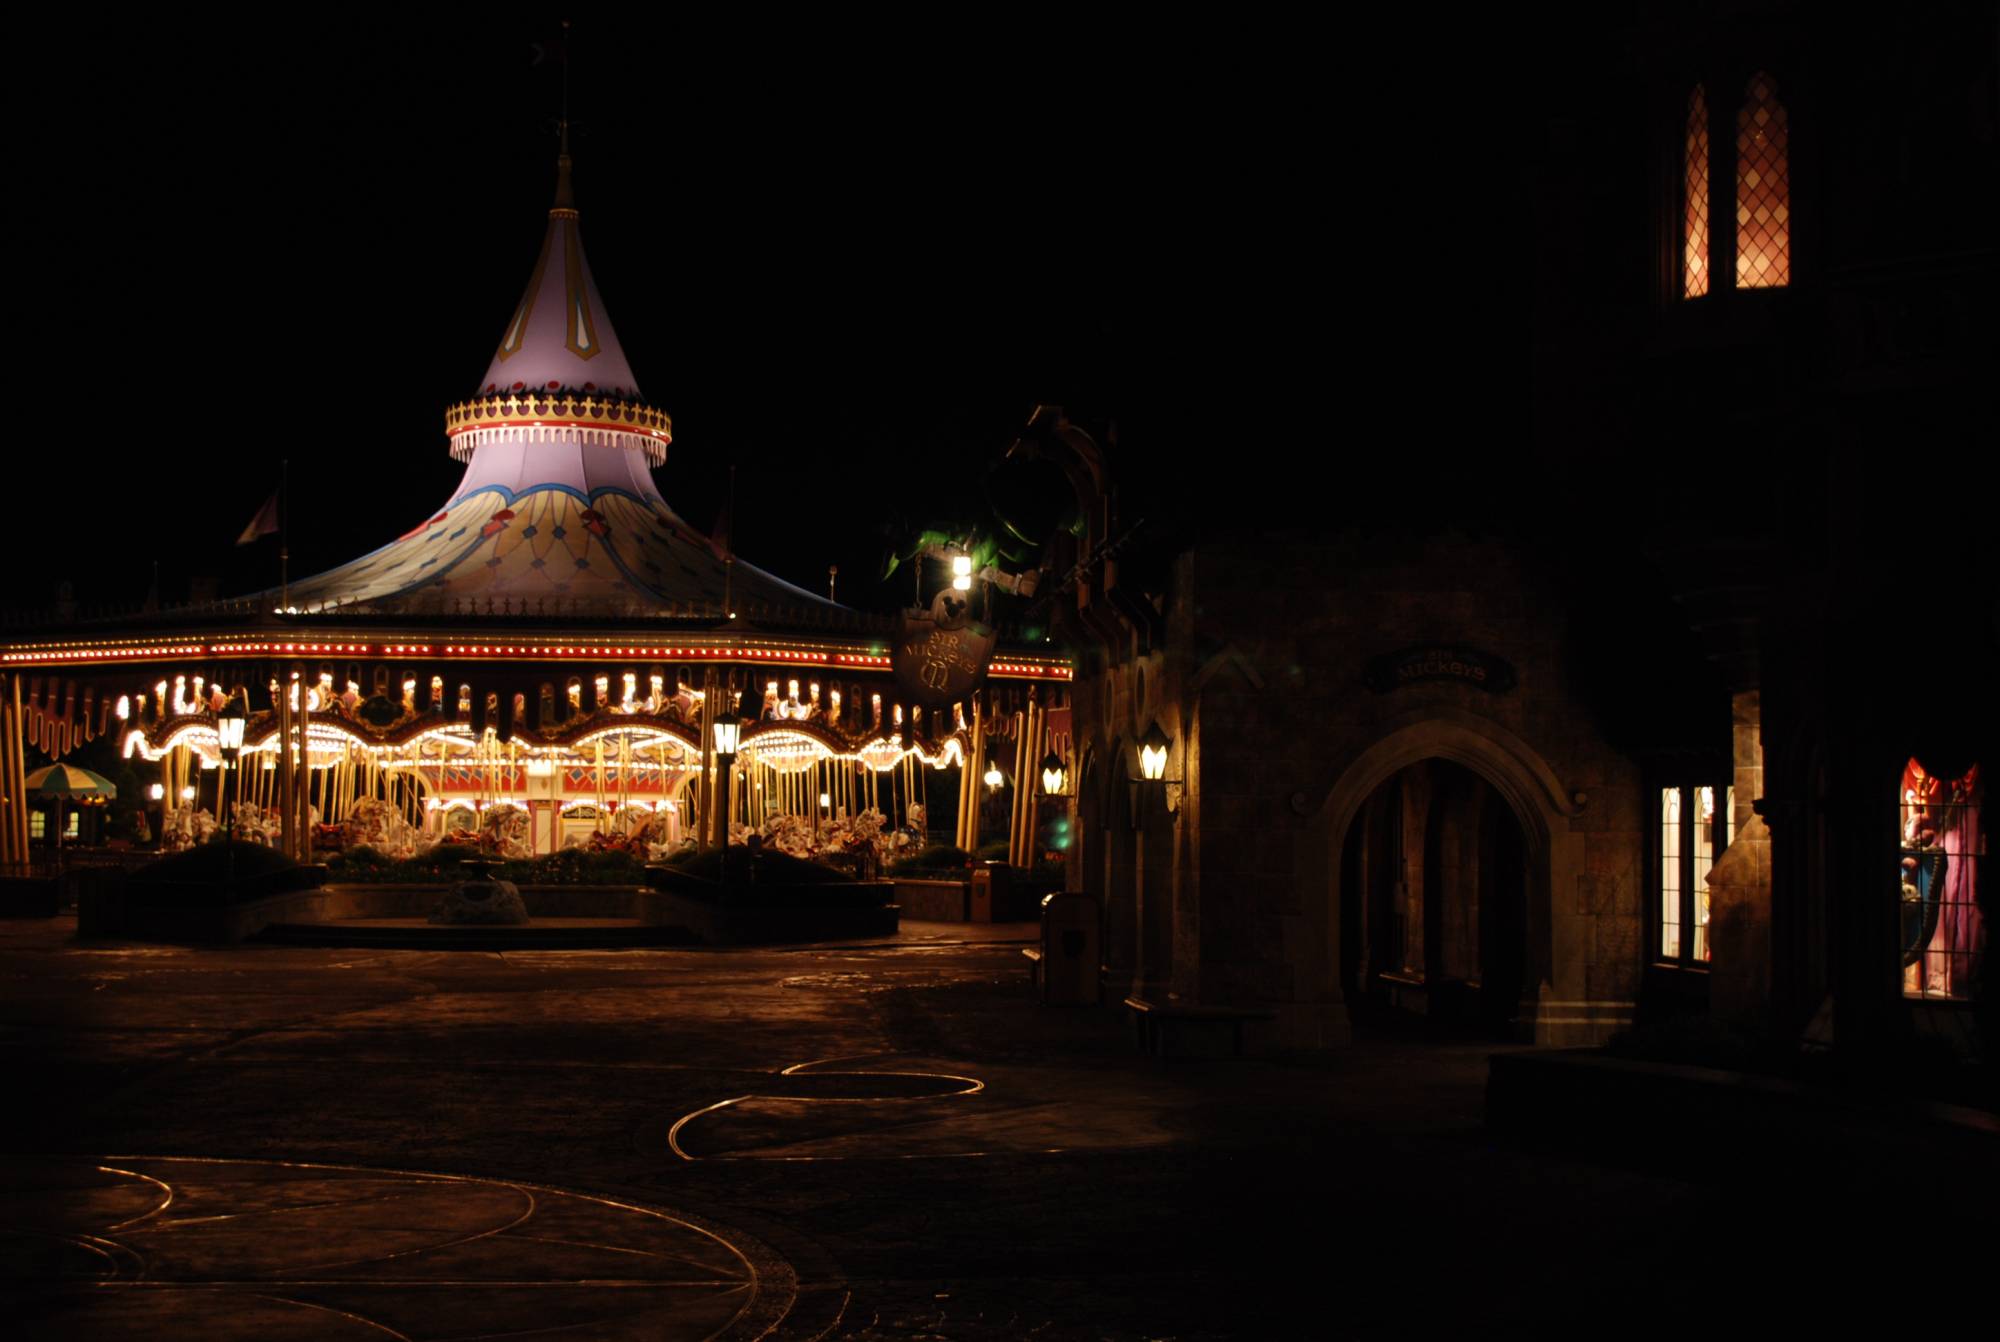 Cinderella's carousel